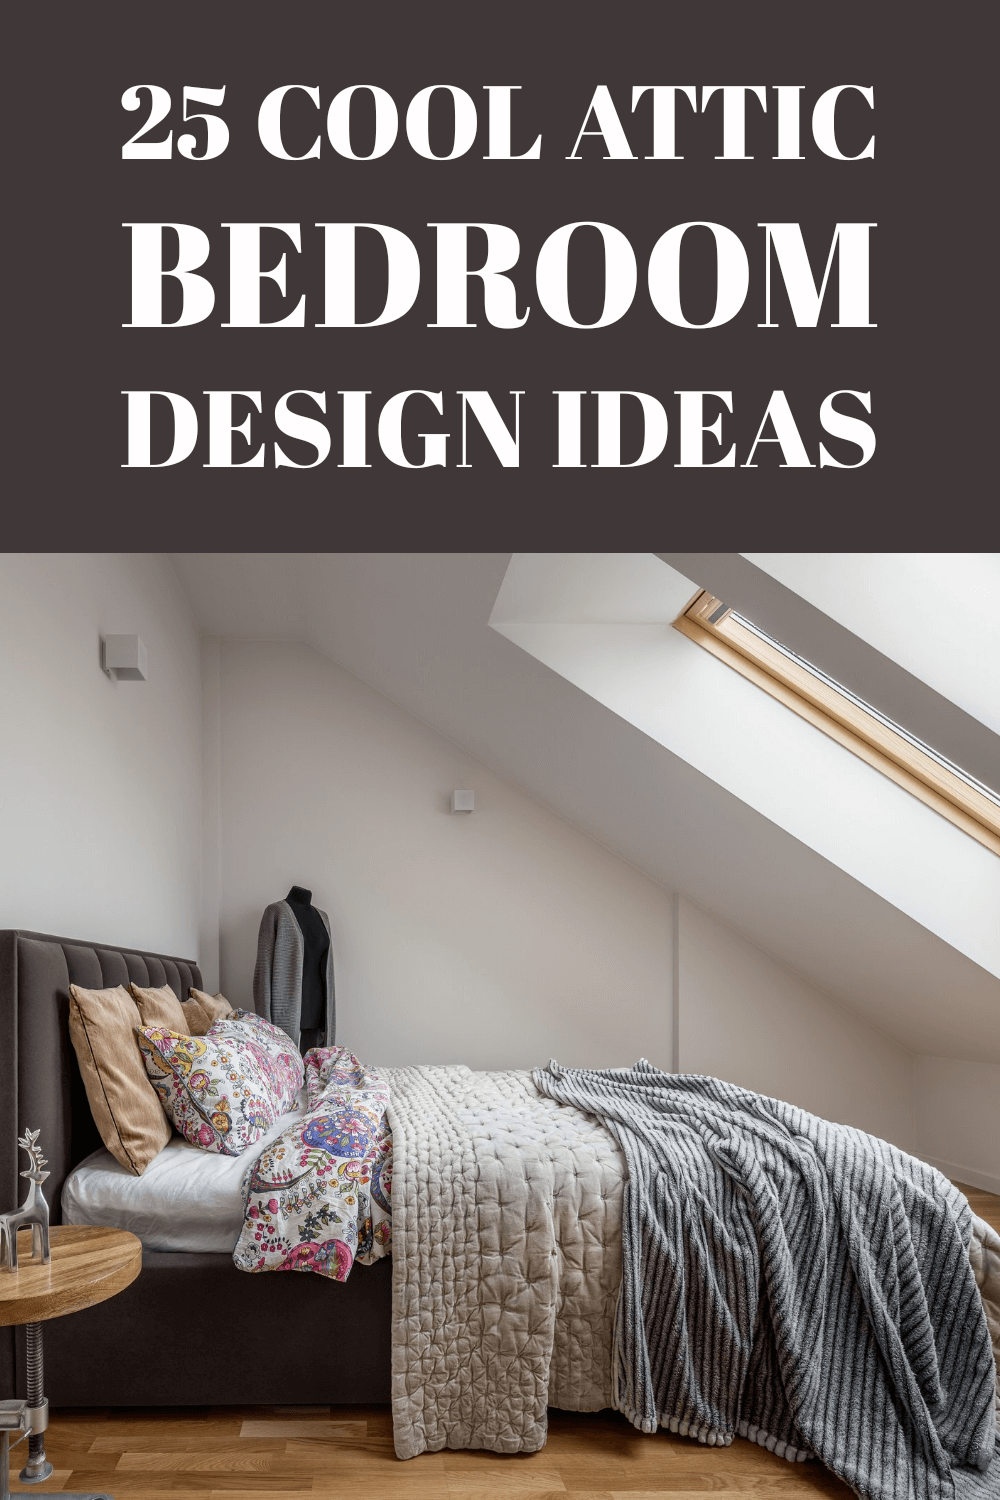 25 Cool Attic Bedroom Design Ideas